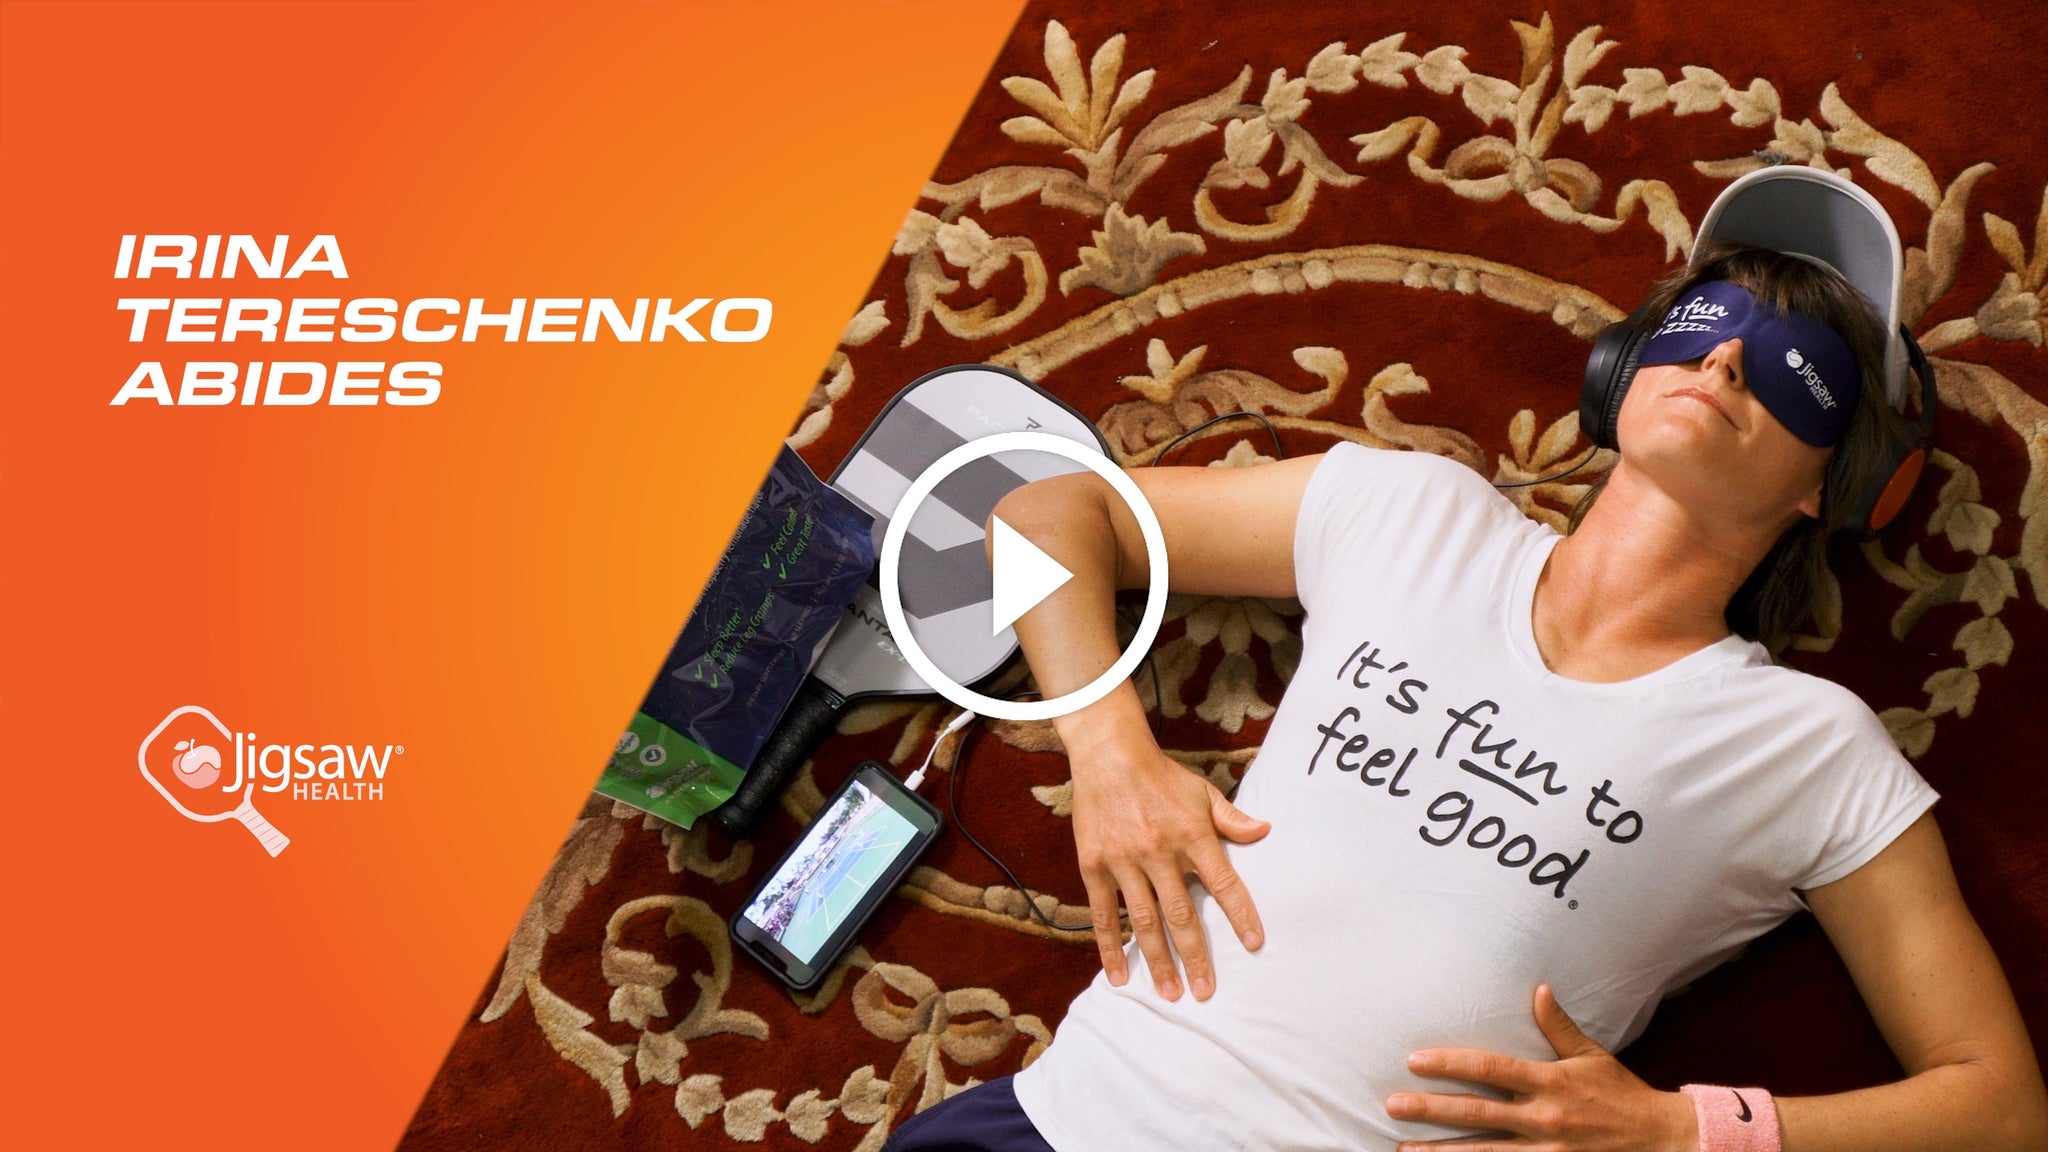 Irina Tereschenko Abides | We Love Pickleball, Too (and the Big Lebowski)